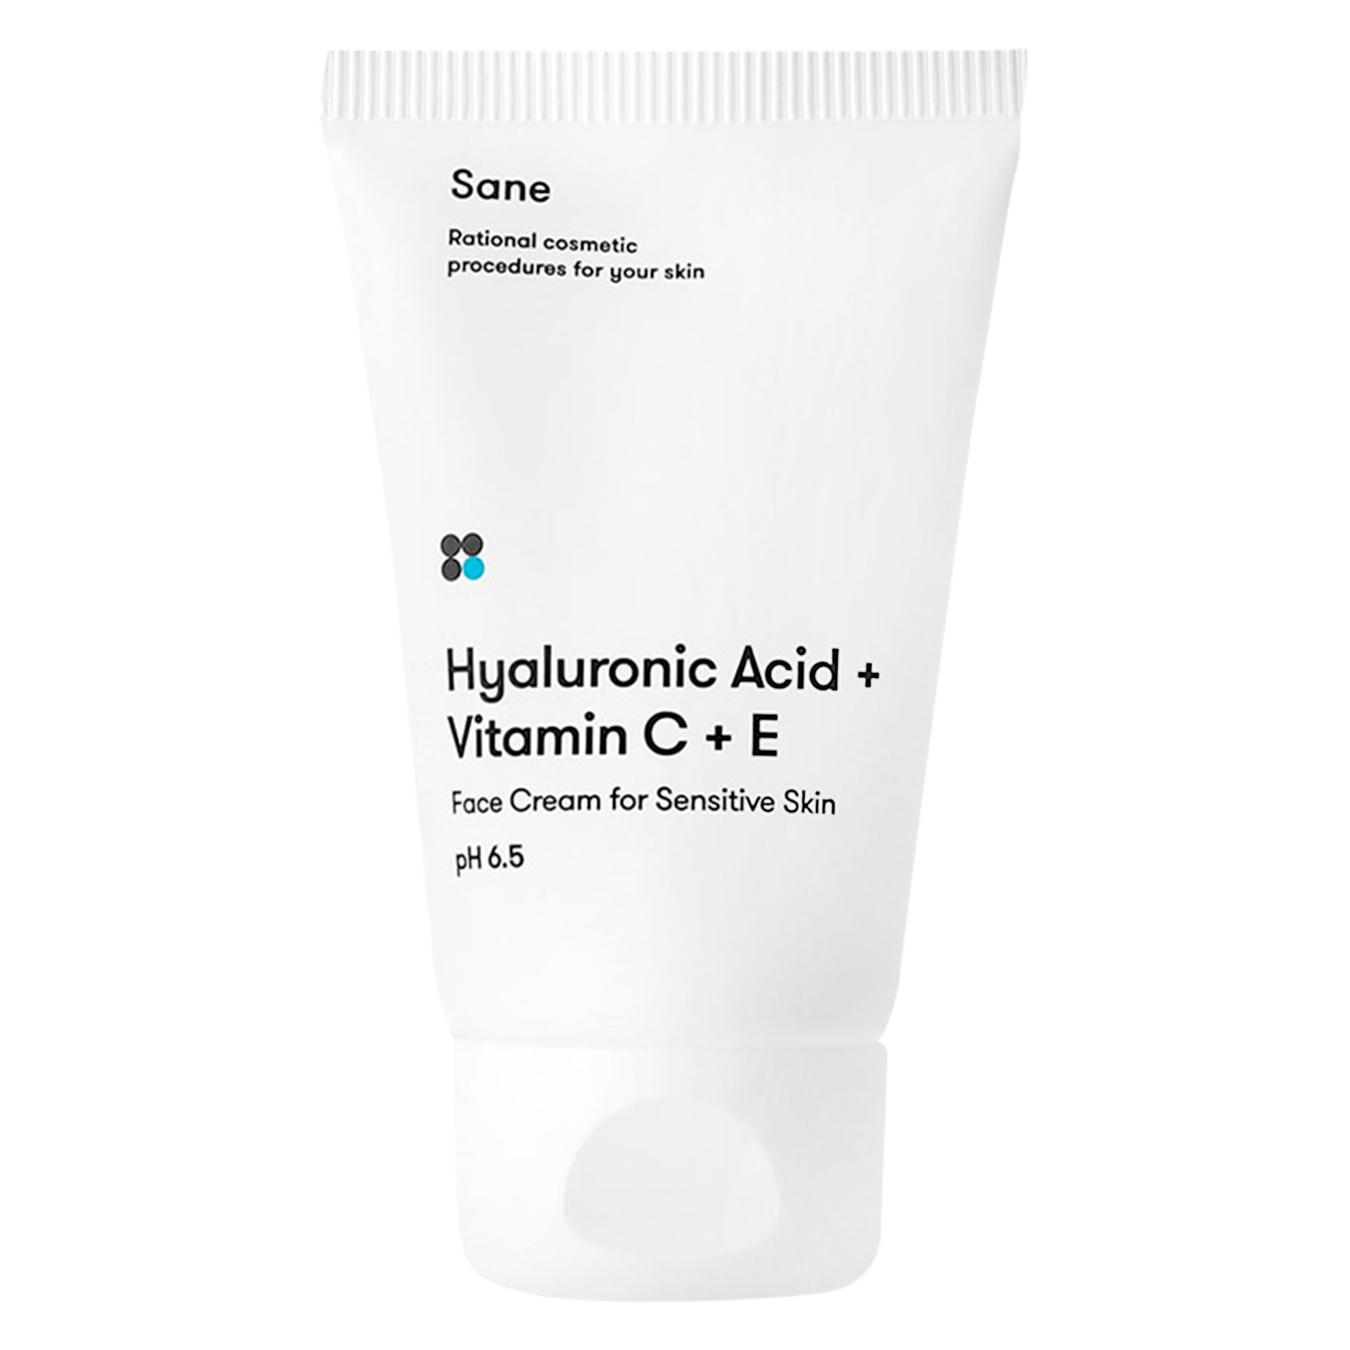 Sane cream for sensitive facial skin with hyaluronic acid + vitamin C + E 40 ml